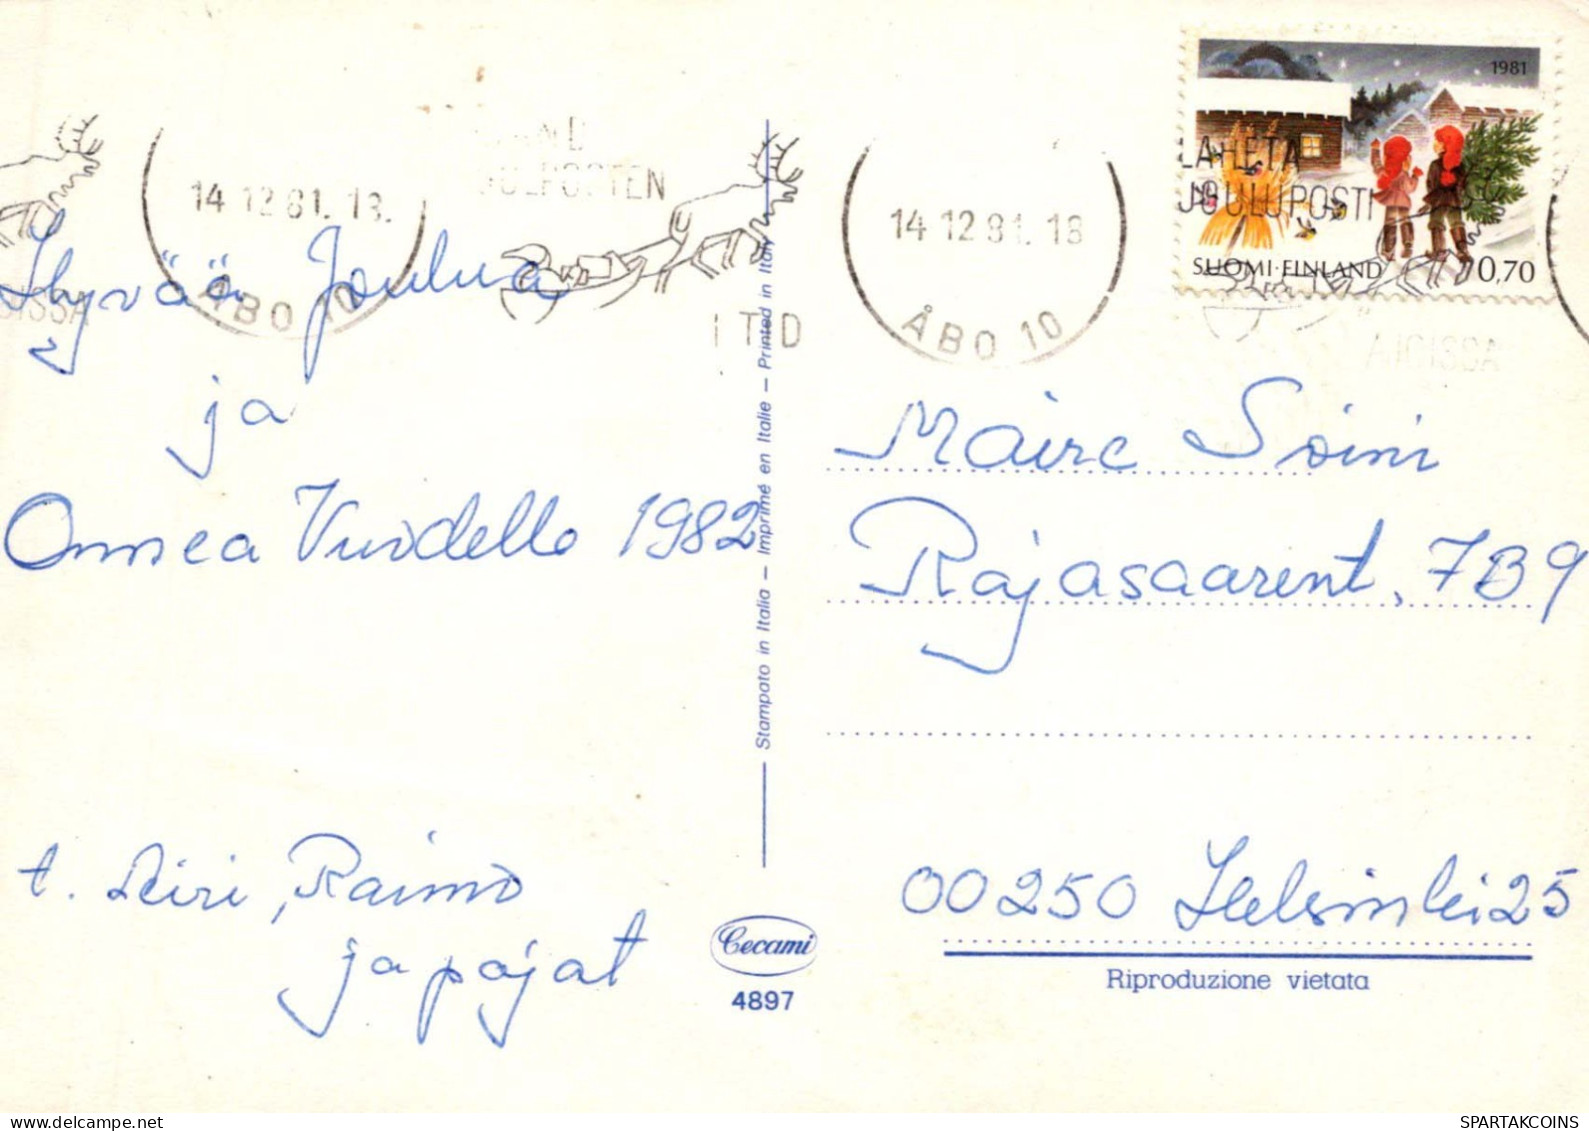 BAMBINO BAMBINO Scena S Paesaggios Vintage Postal CPSM #PBT011.IT - Scenes & Landscapes